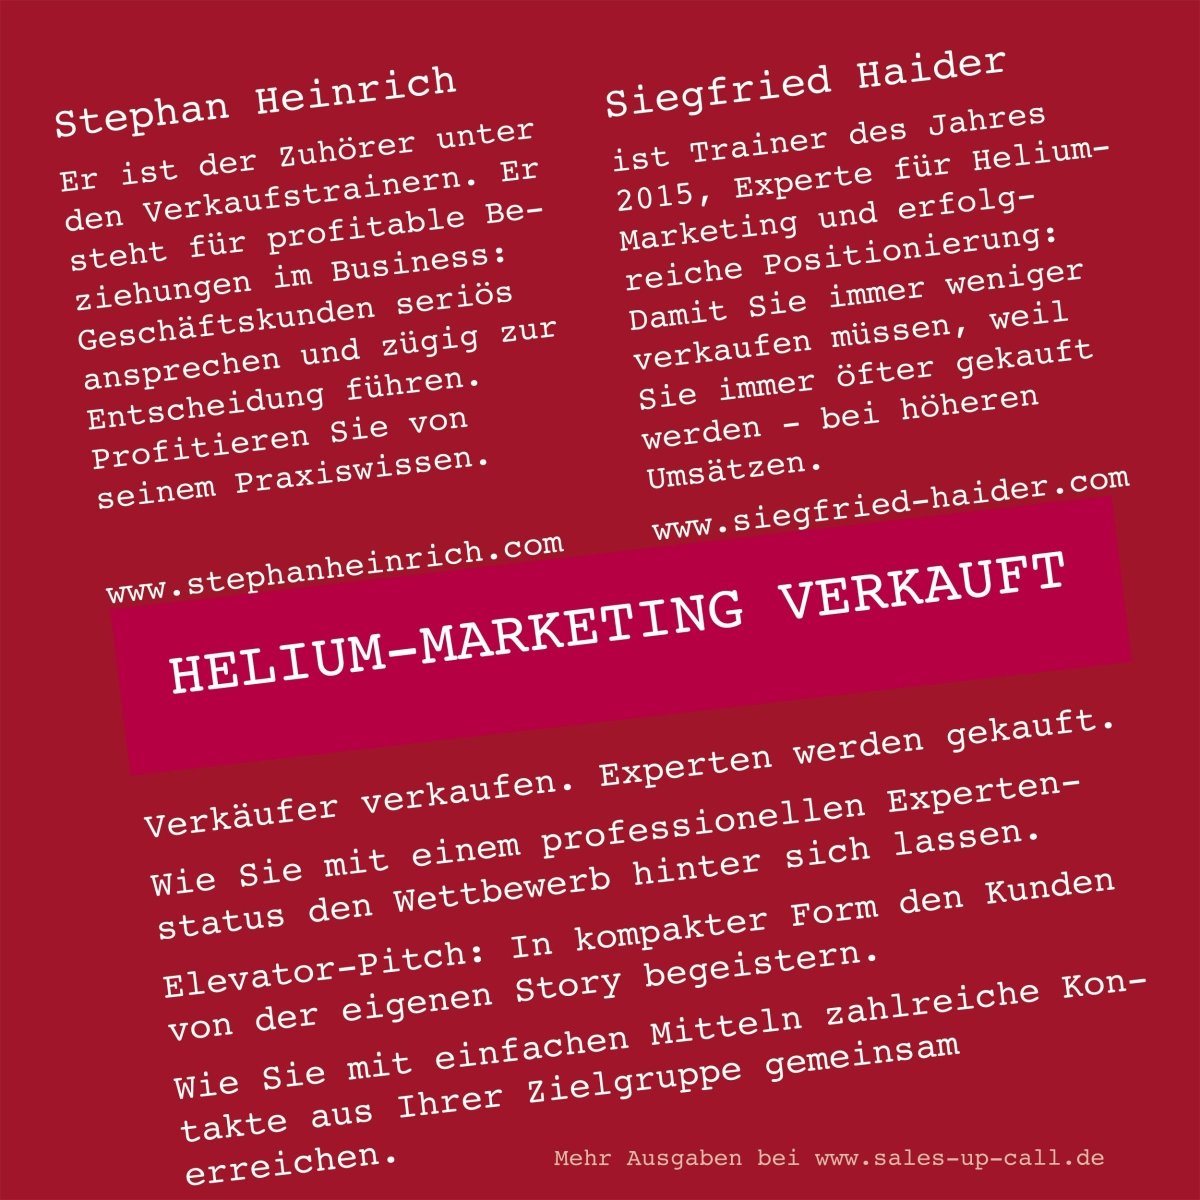 Helium-Marketing verkauft - Sales-up-Call - Stephan Heinrich